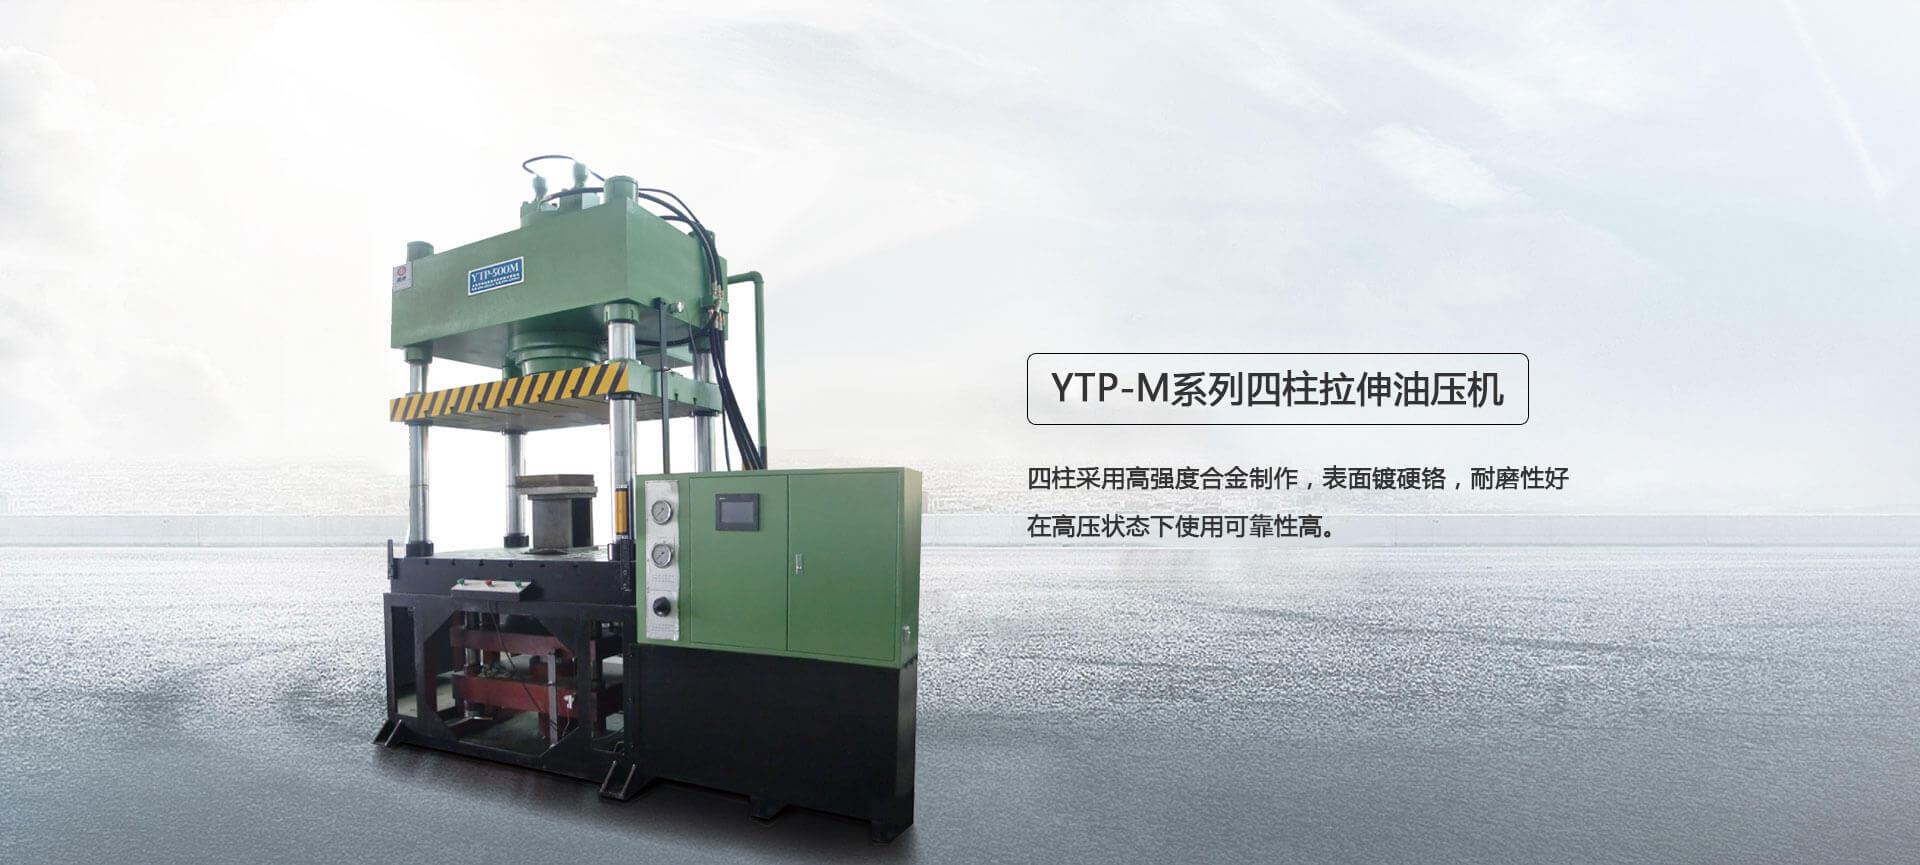 YTP-M系列四柱拉伸液压机